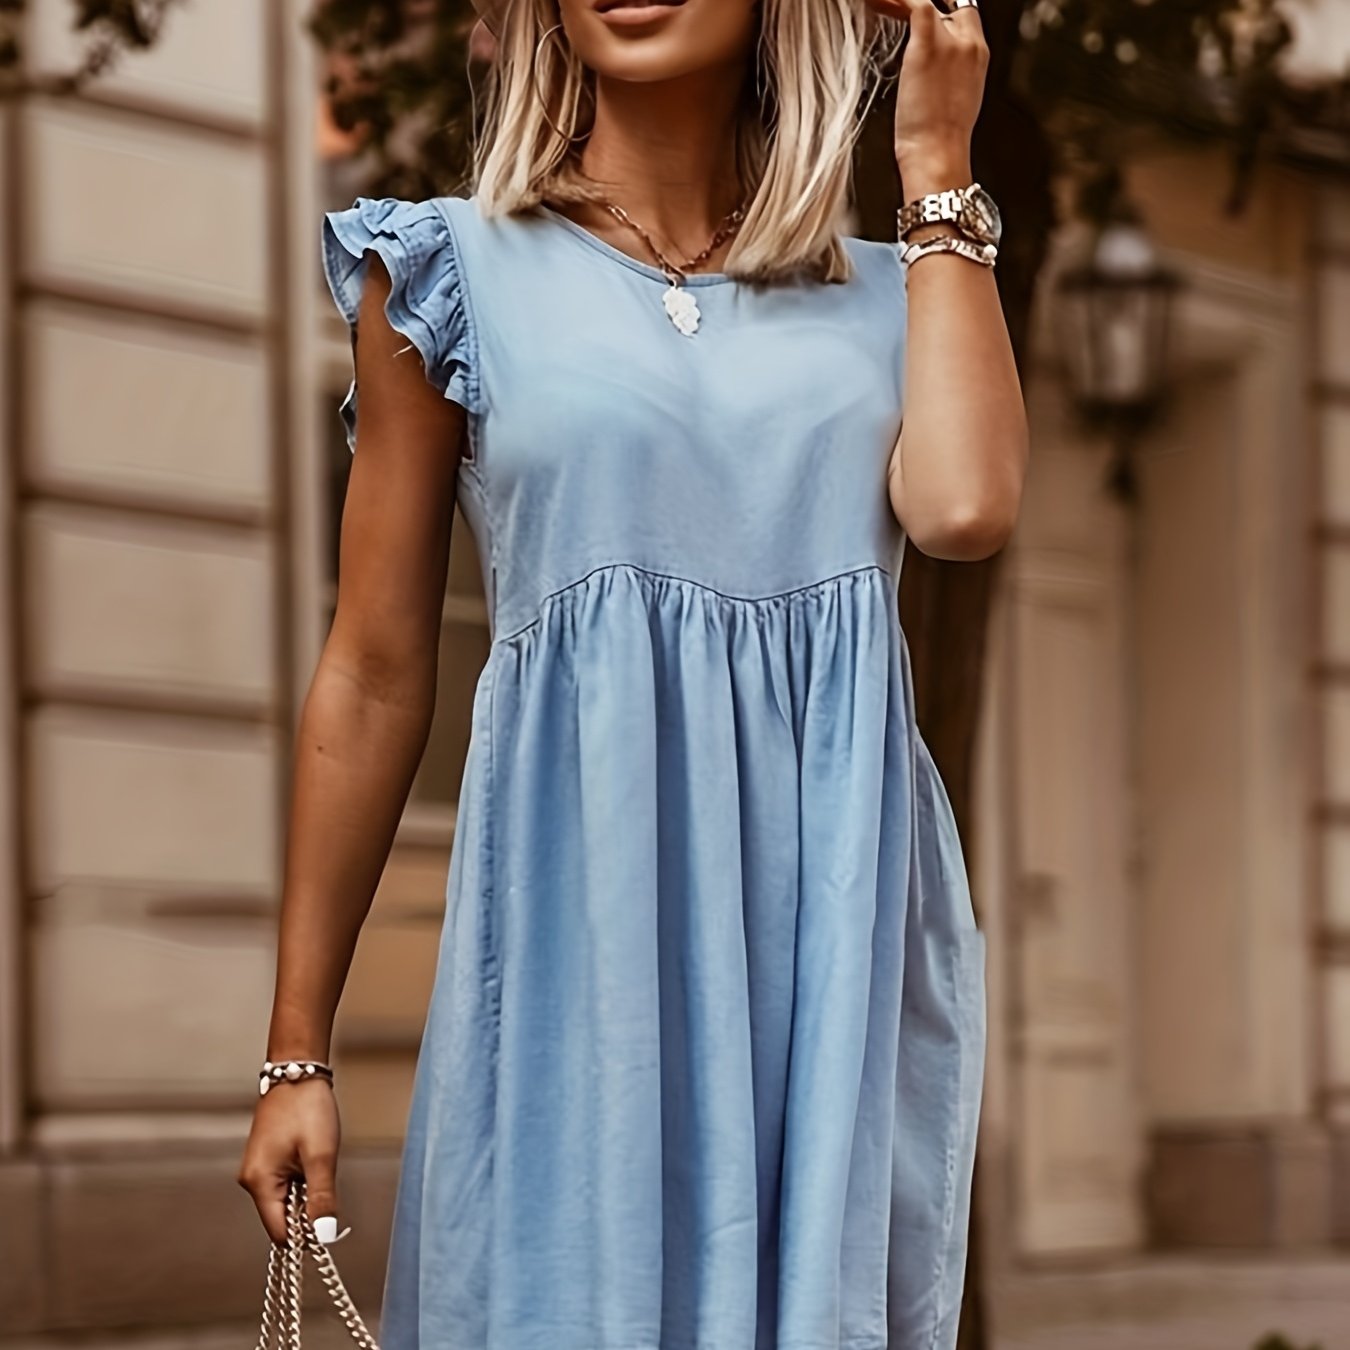 Lovevop-Sky Blue Ruffle Denim Dresses, Round Neck Loose Fit Back Single-Breasted Button Casual Denim Dresses, Women's Denim Clothing